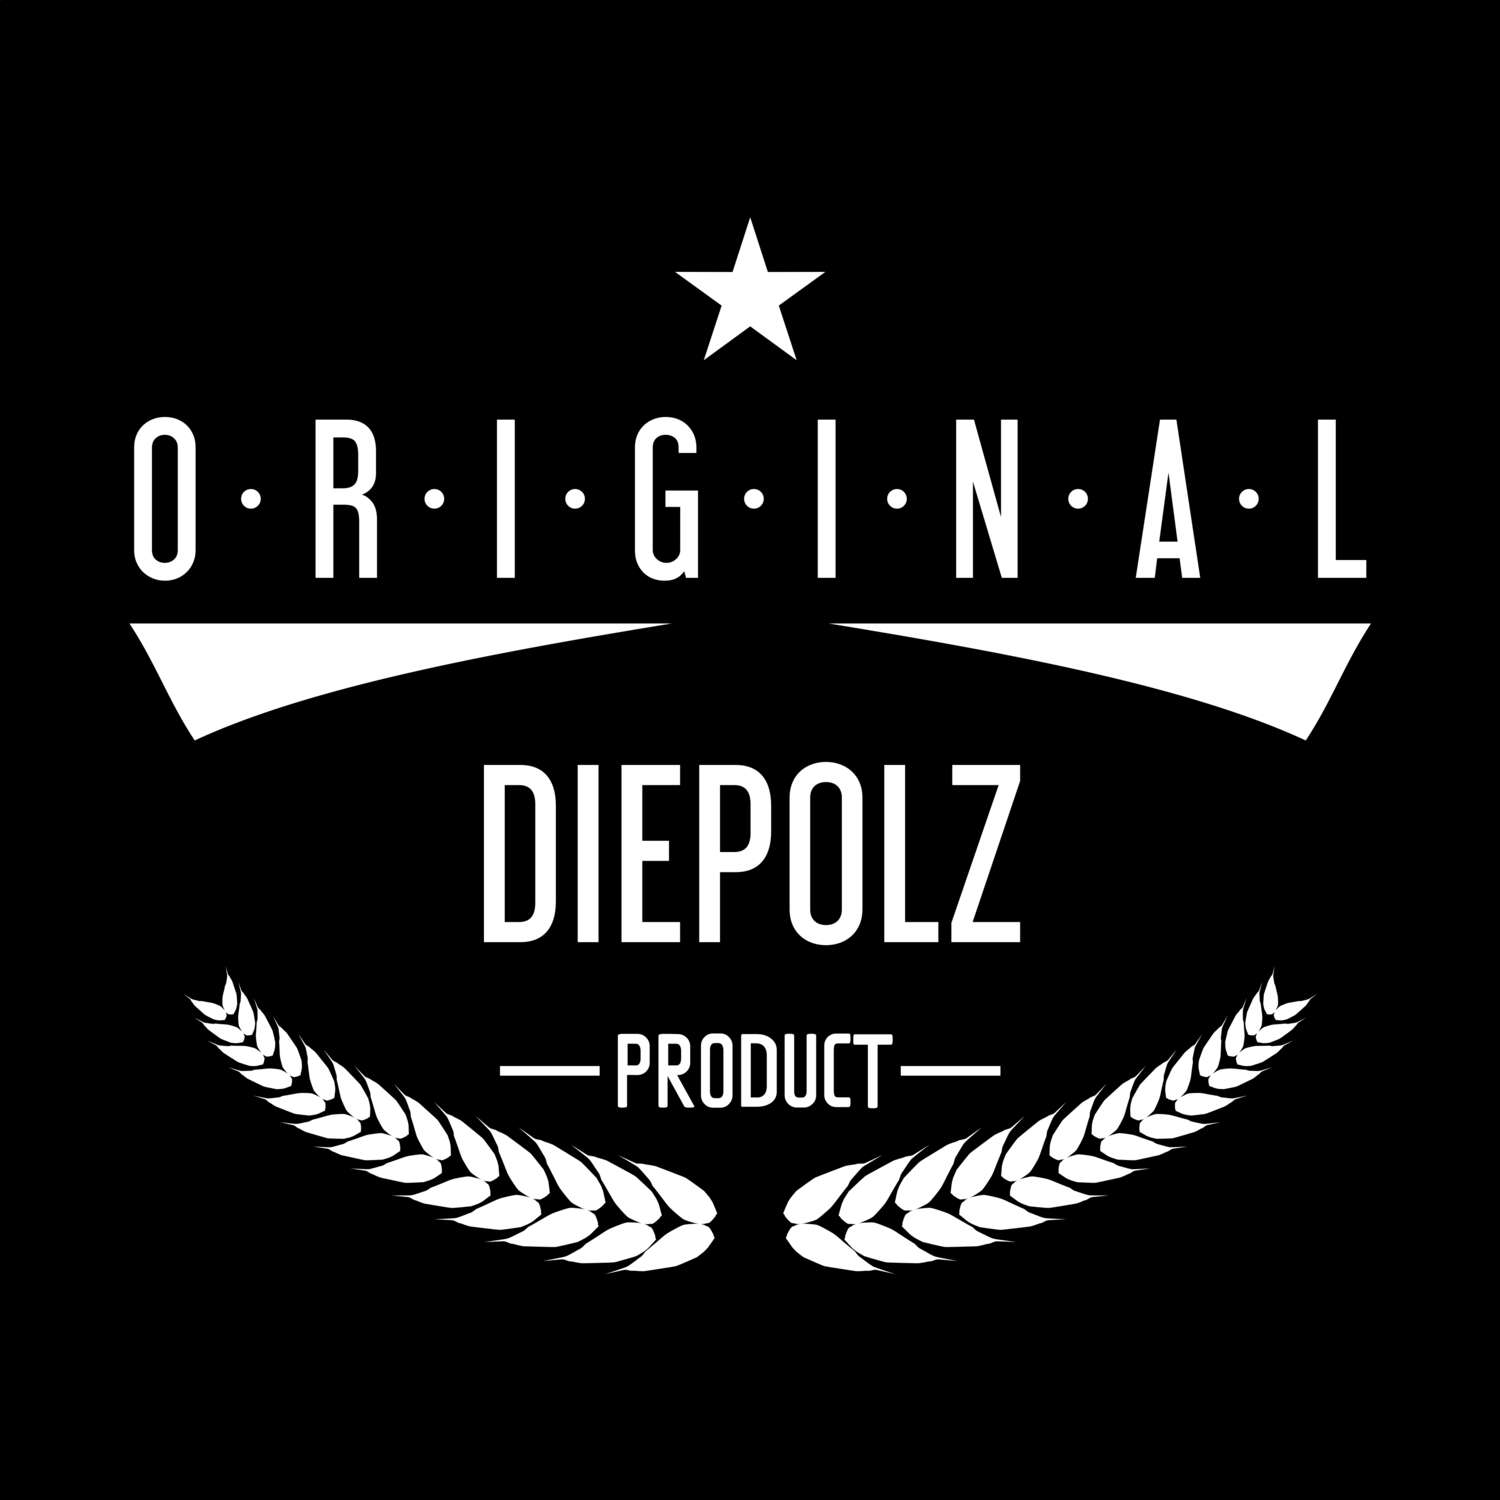 Diepolz T-Shirt »Original Product«